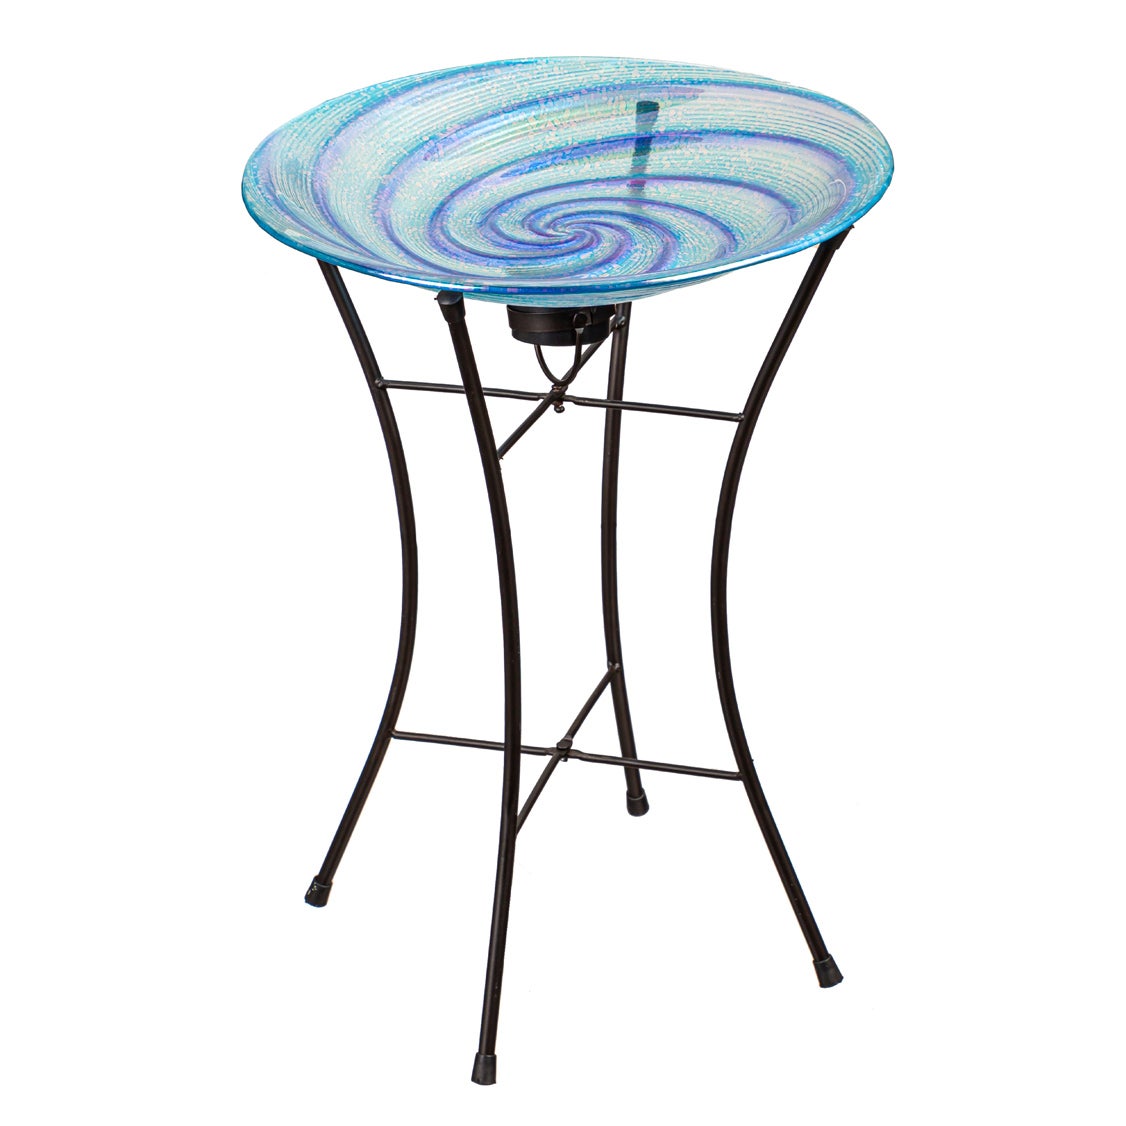 15" Blue Swirl Glass Bird Bath with Solar Stand